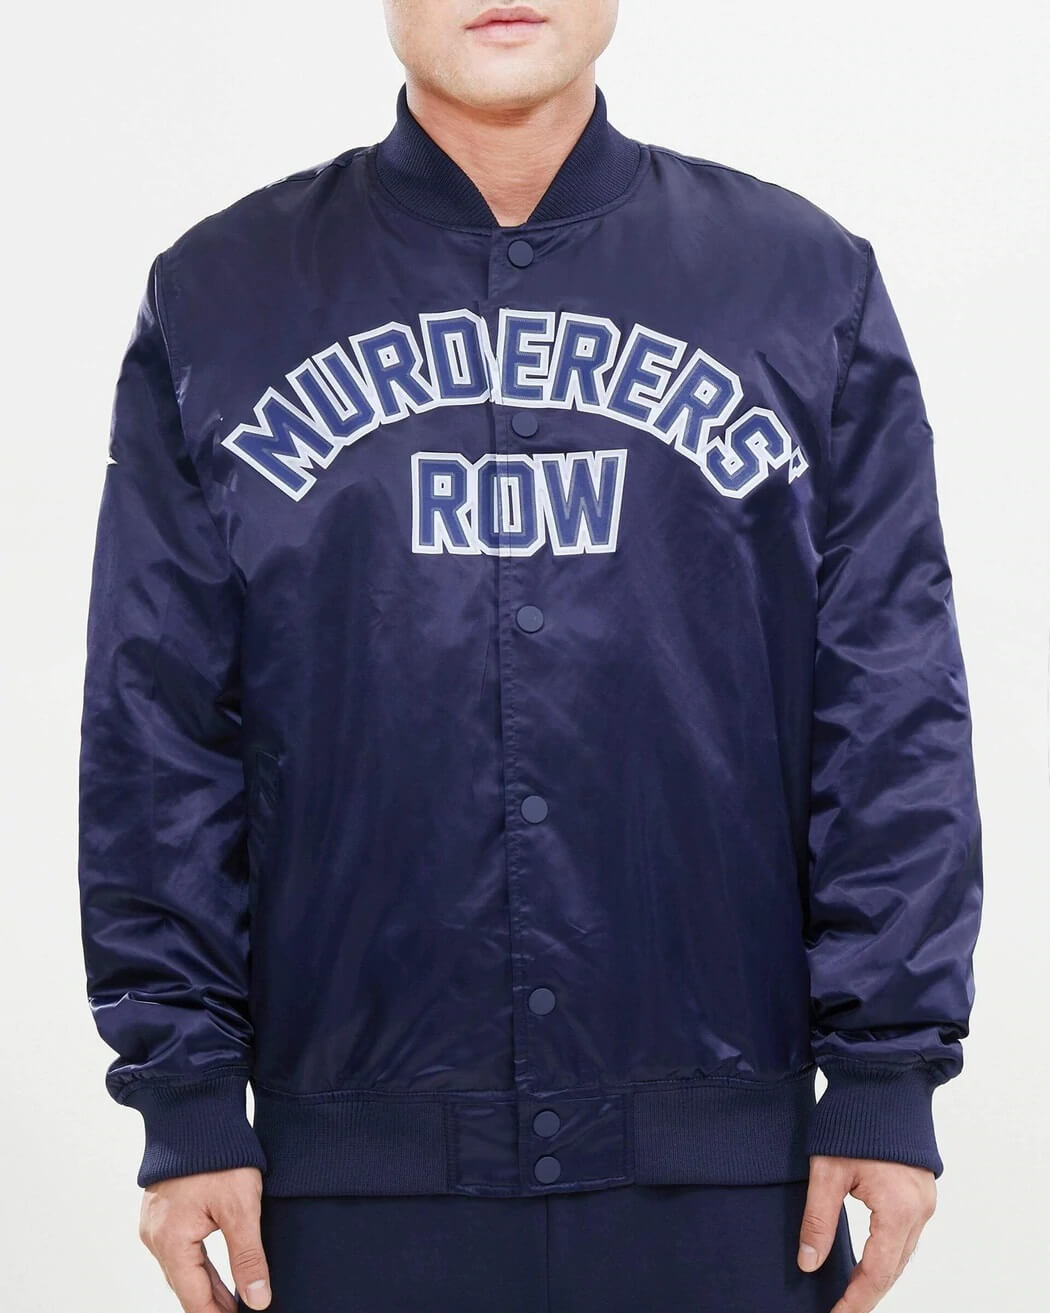 Murderer's Row - Yankees - Baseball T-Shirt